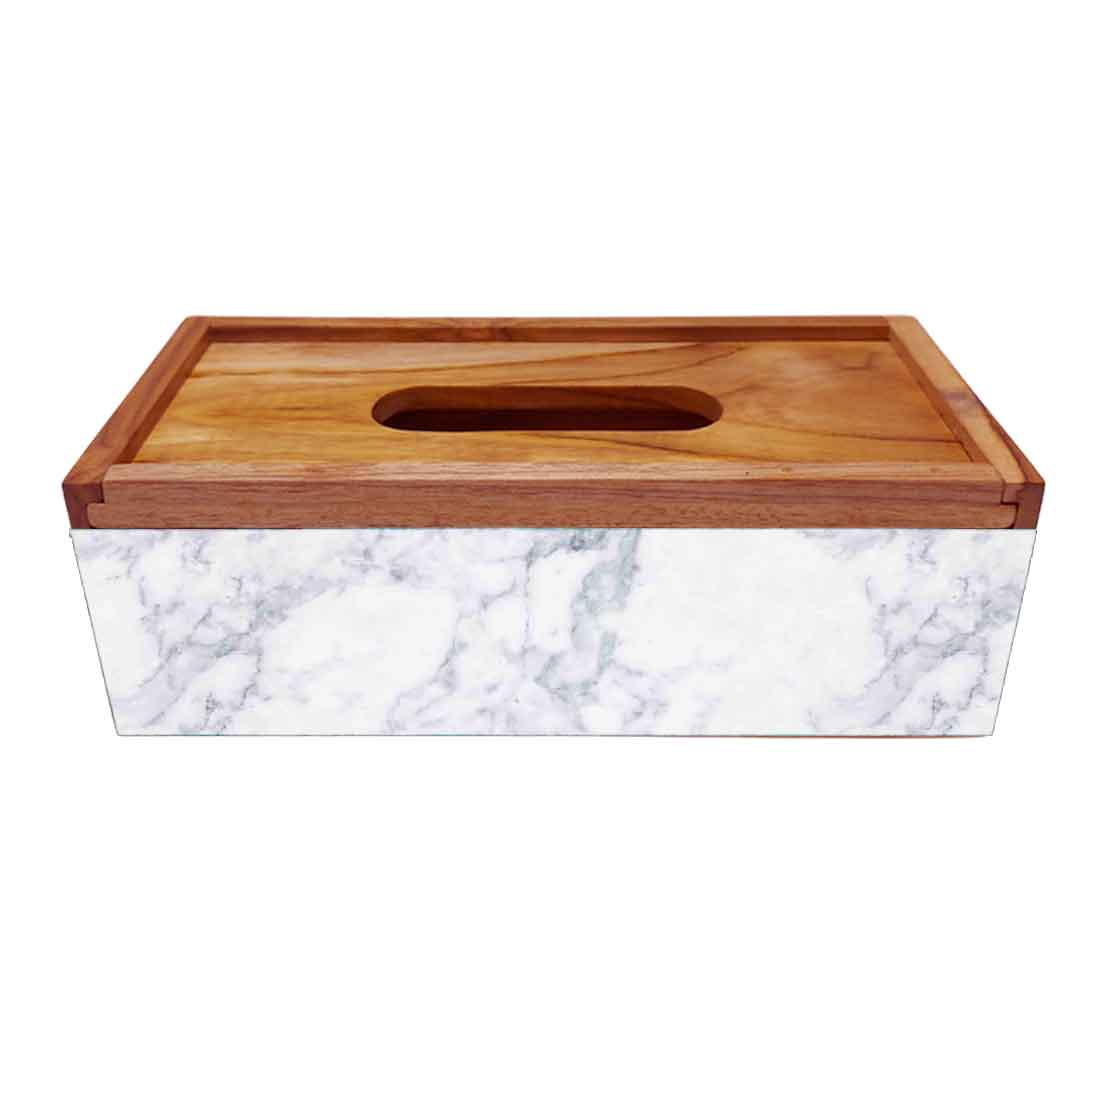 Wooden Tissue Box Cover Holder for Office Car - White Marble